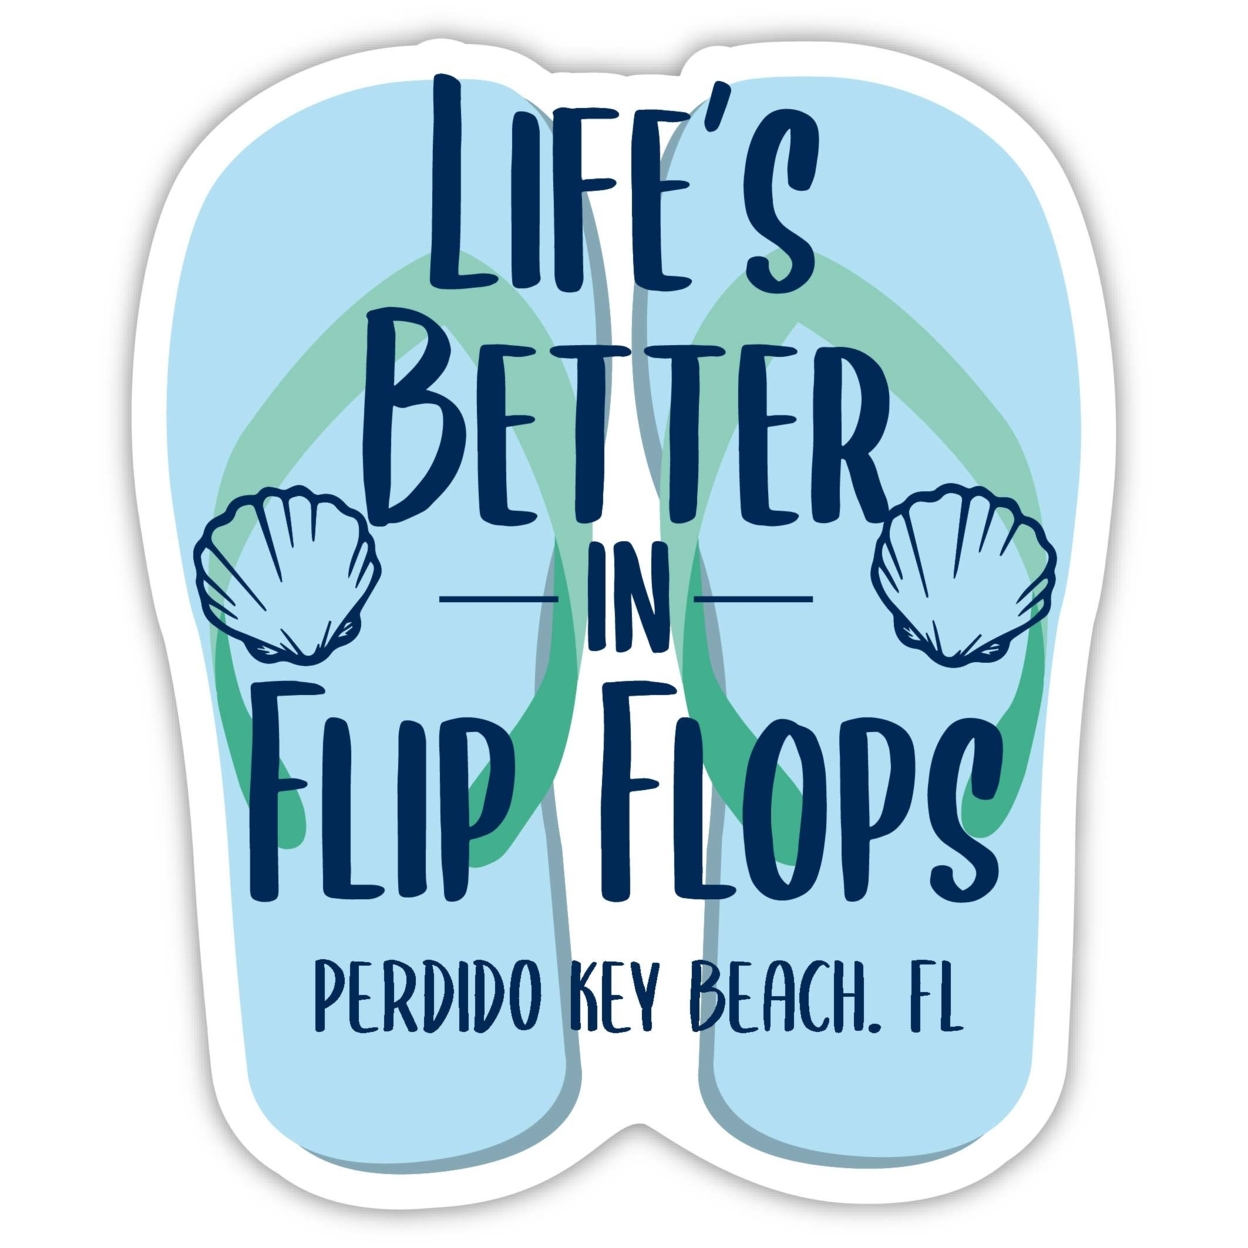 Perdido Key Beach Florida Souvenir 4 Inch Vinyl Decal Sticker Flip Flop Design